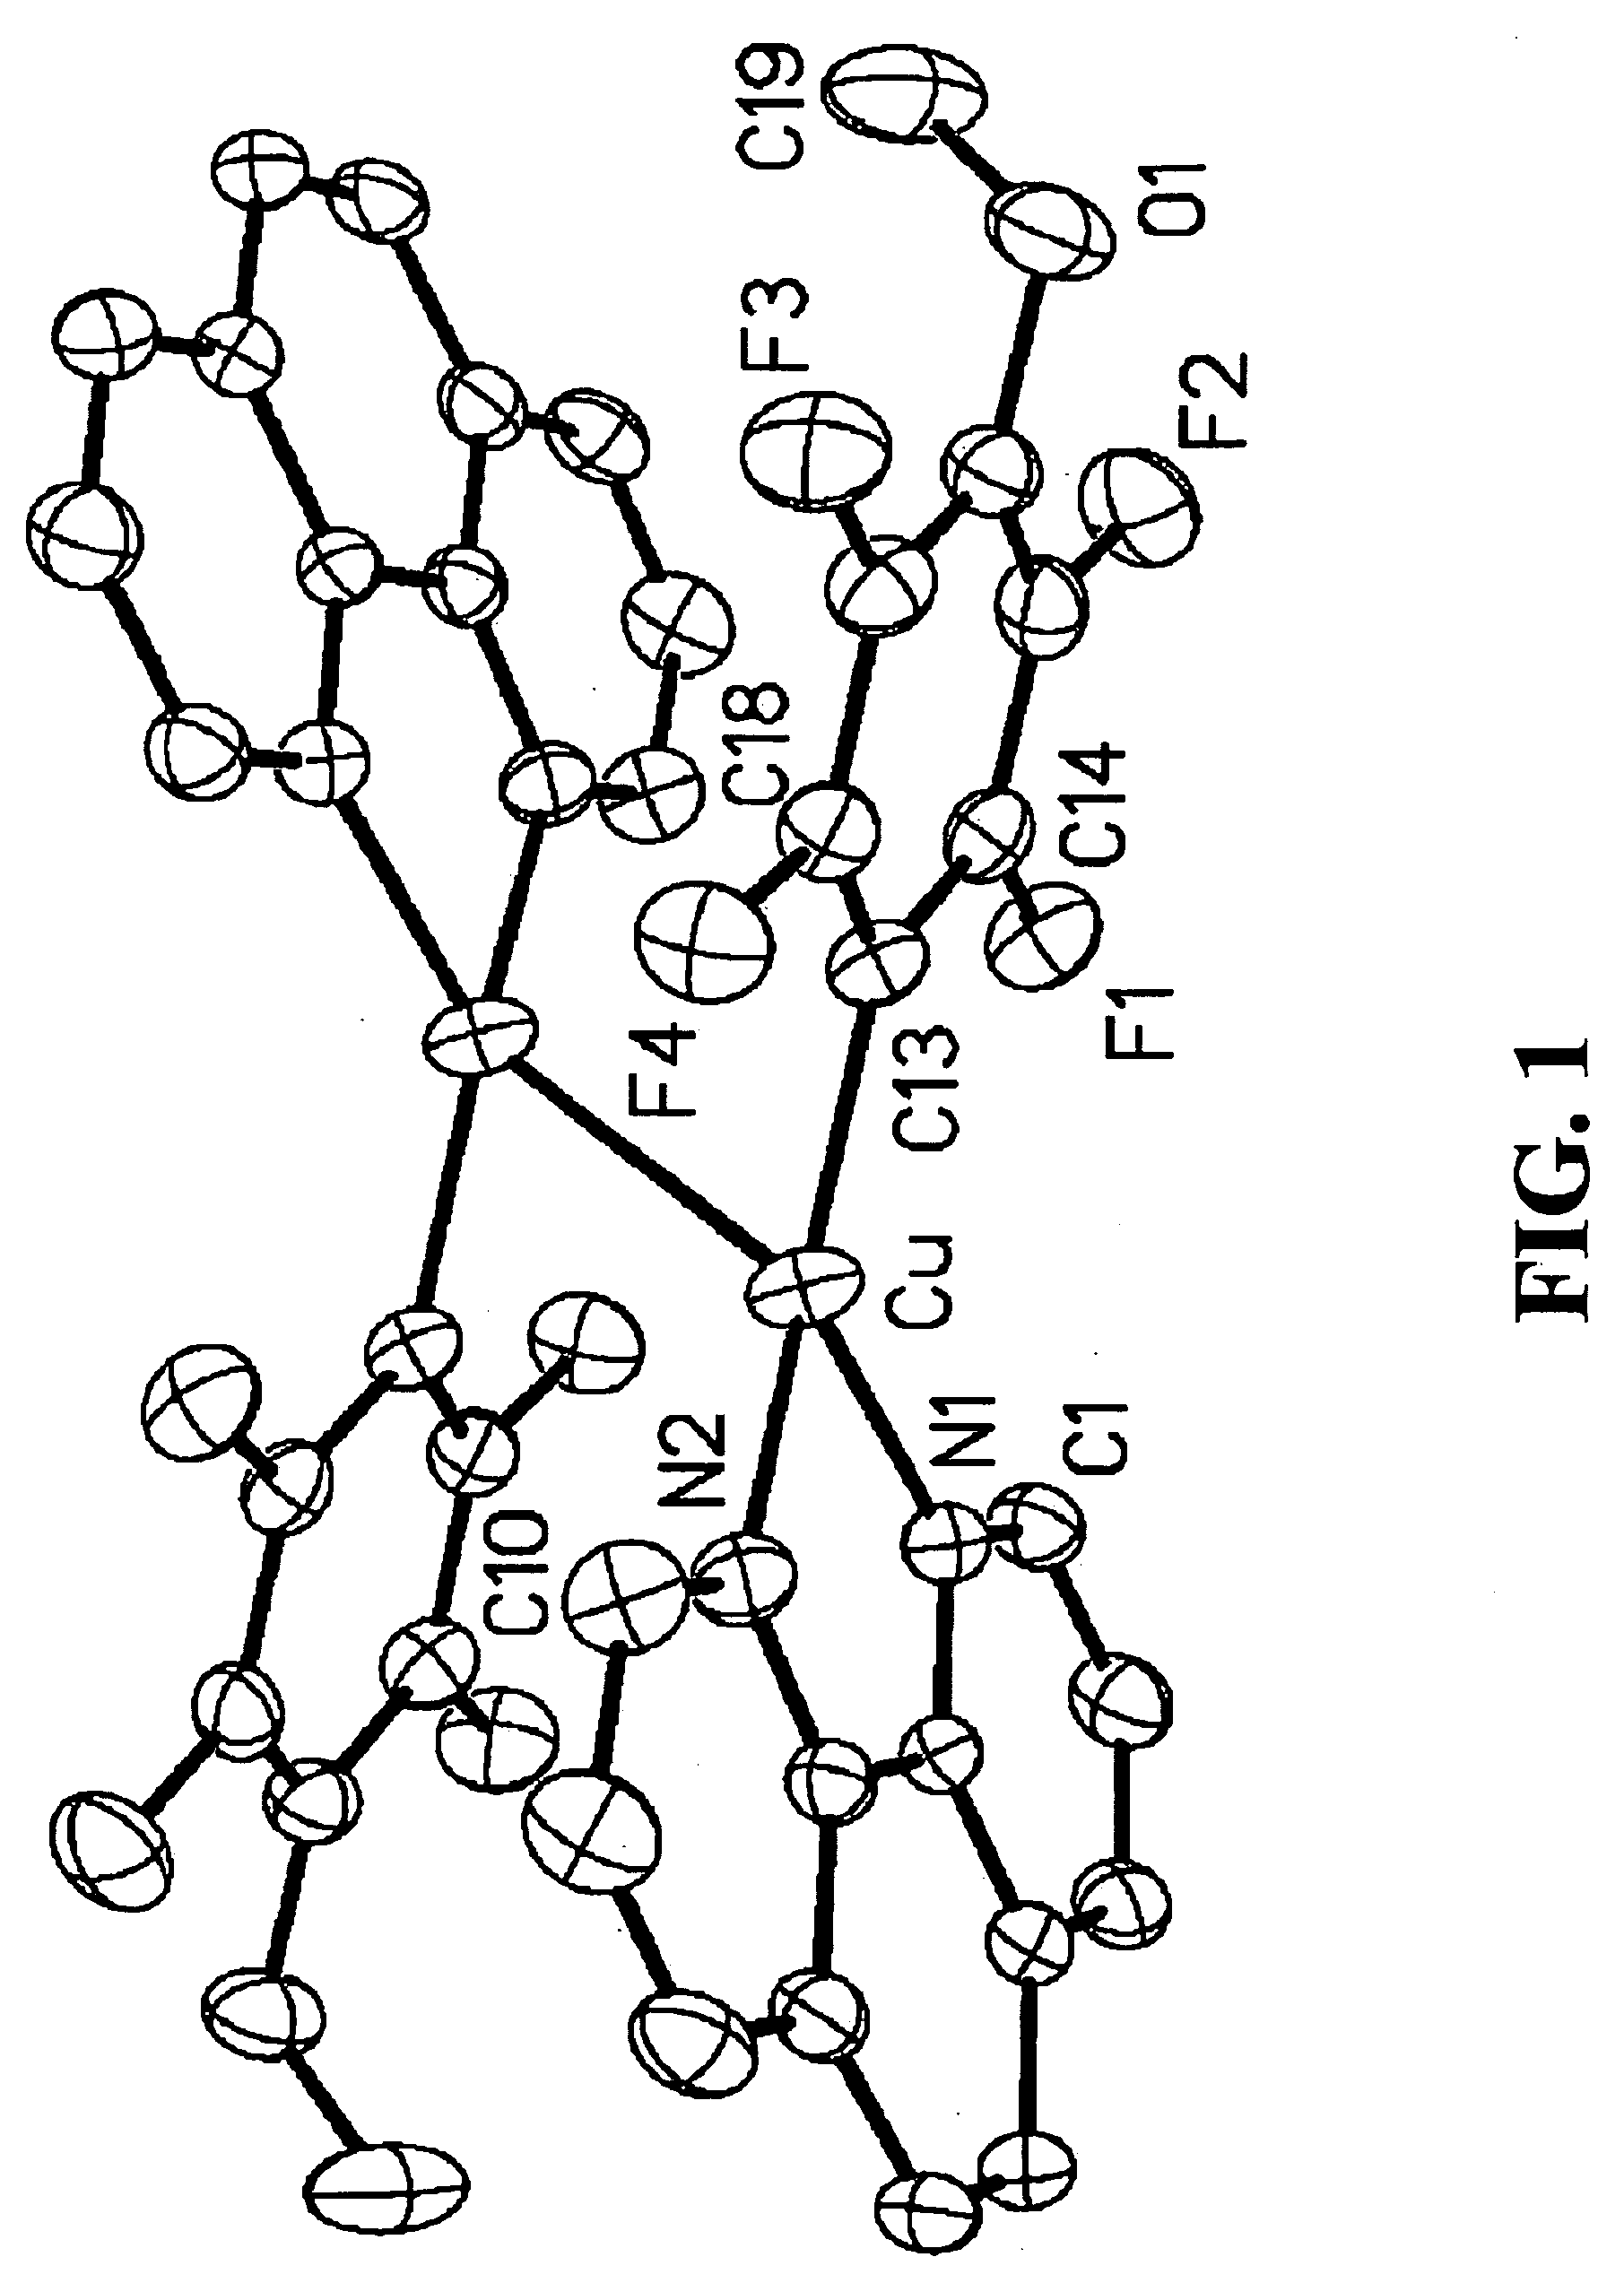 Copper-catalyzed c-h bond arylation